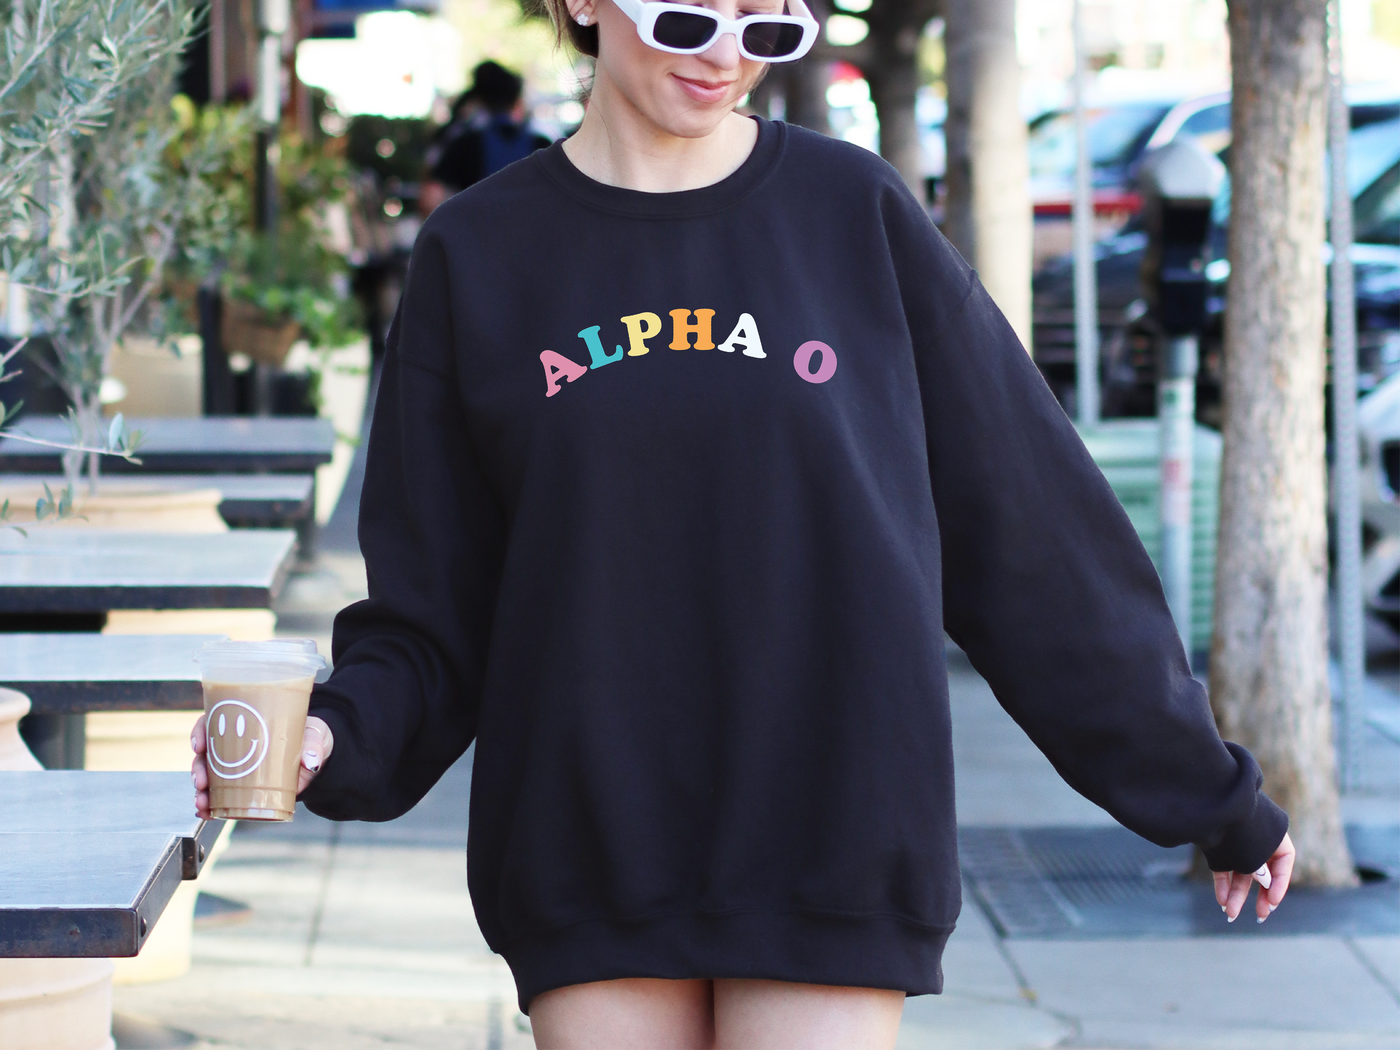 Alpha Omicron Pi Colorful Text Cute Alpha O Sorority Crewneck Sweatshirt